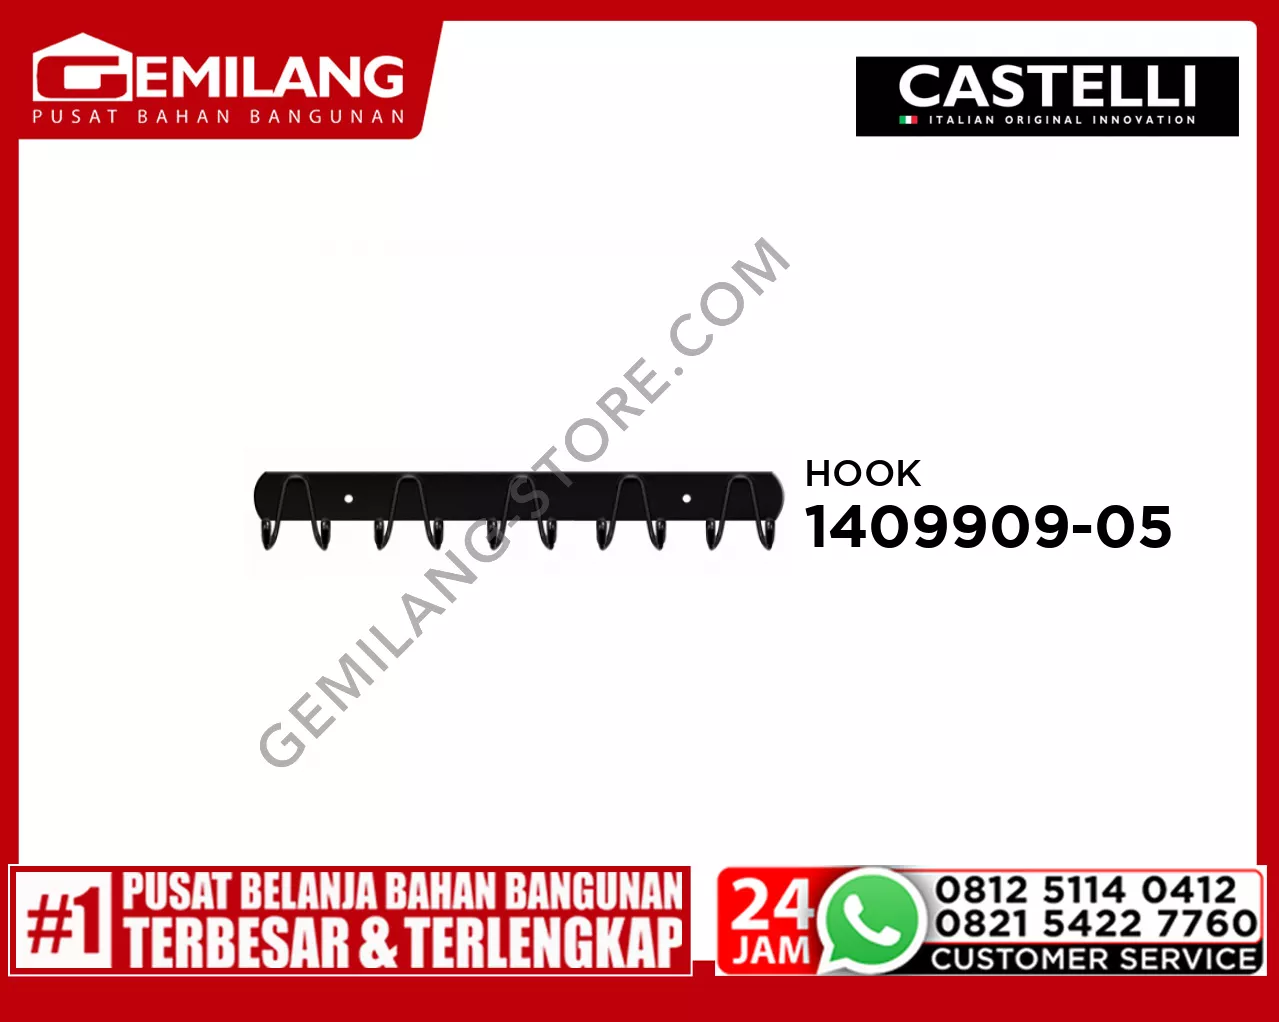 CASTELLI HOOK-5 1409909-05 BLACK